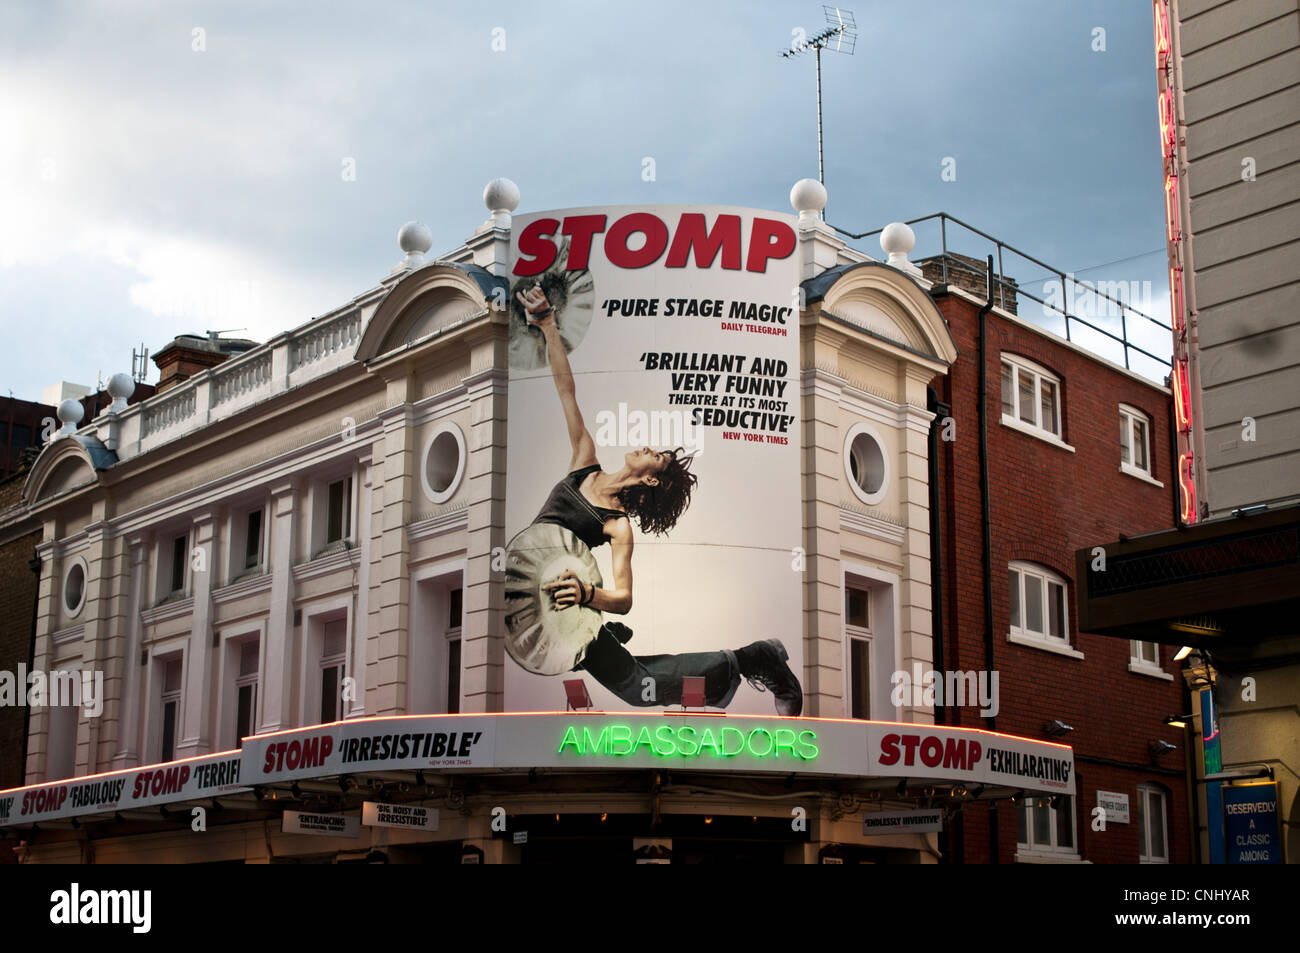 Ambassadors theatre showing 'Stomp', Covent Garden, London, UK Stock Photo